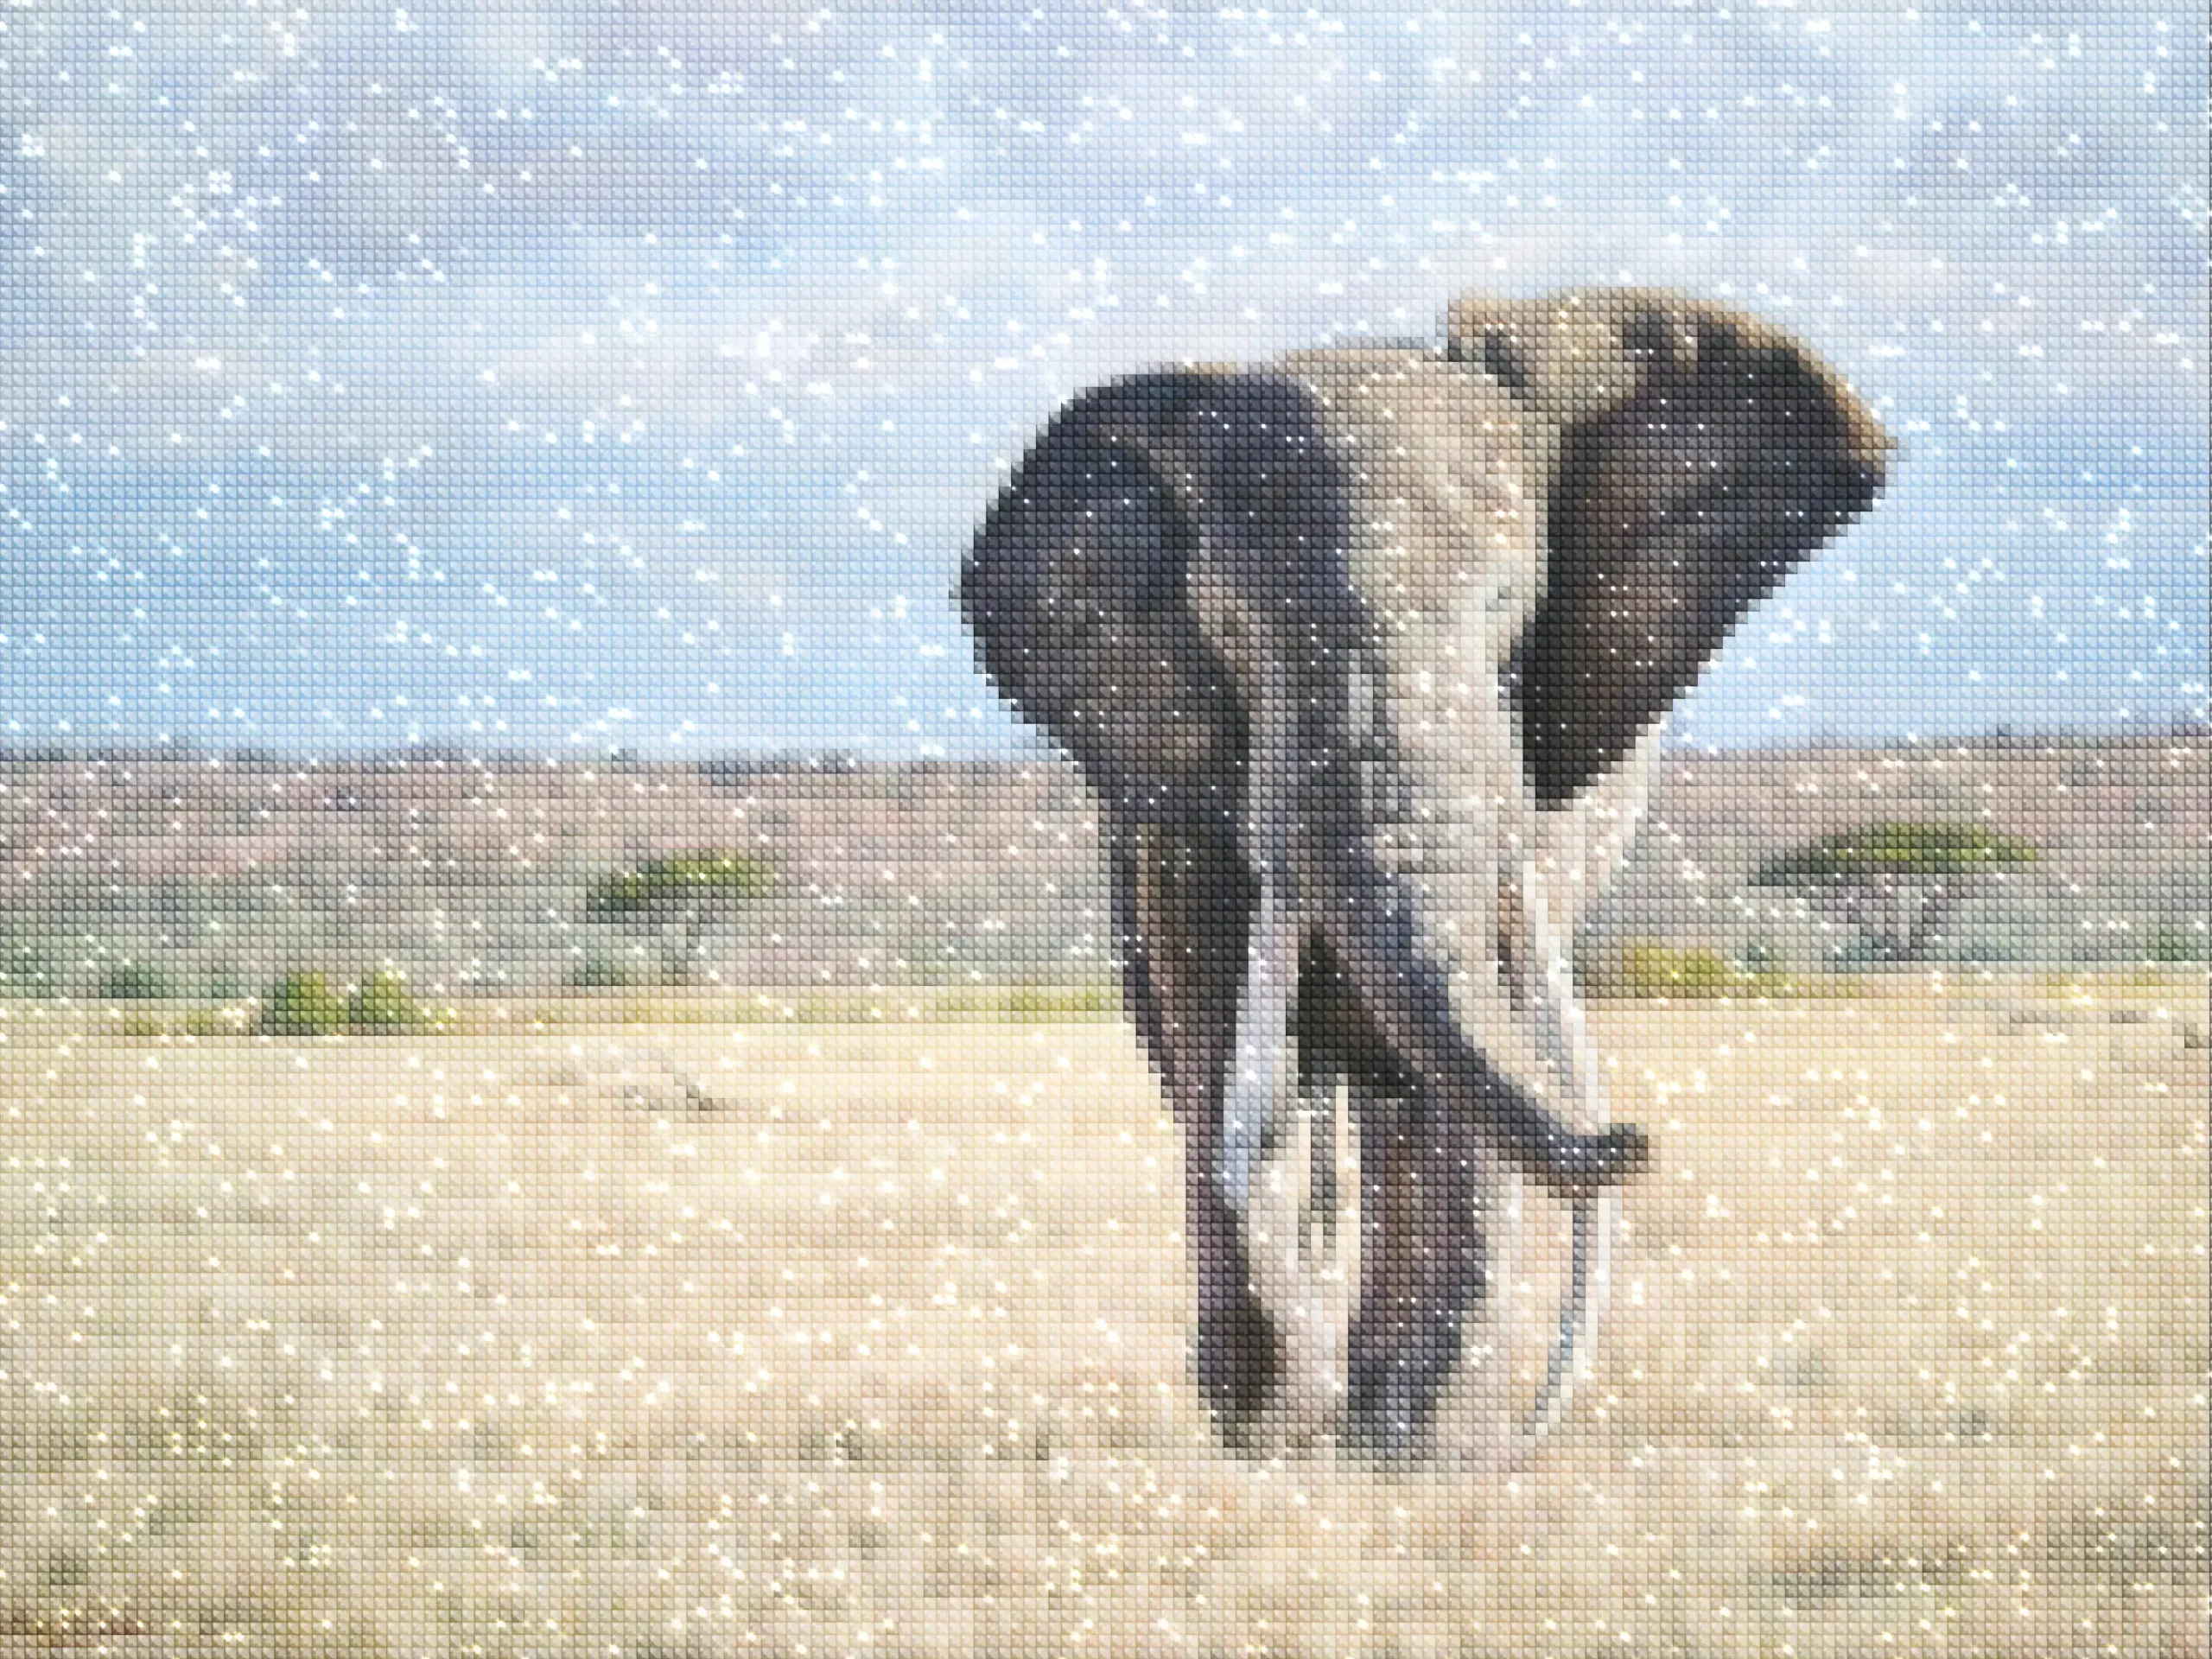 diamanti-mago-kit-pittura-diamante-Animali-Elefante-L'Elefante nel Campo-diamonds.webp